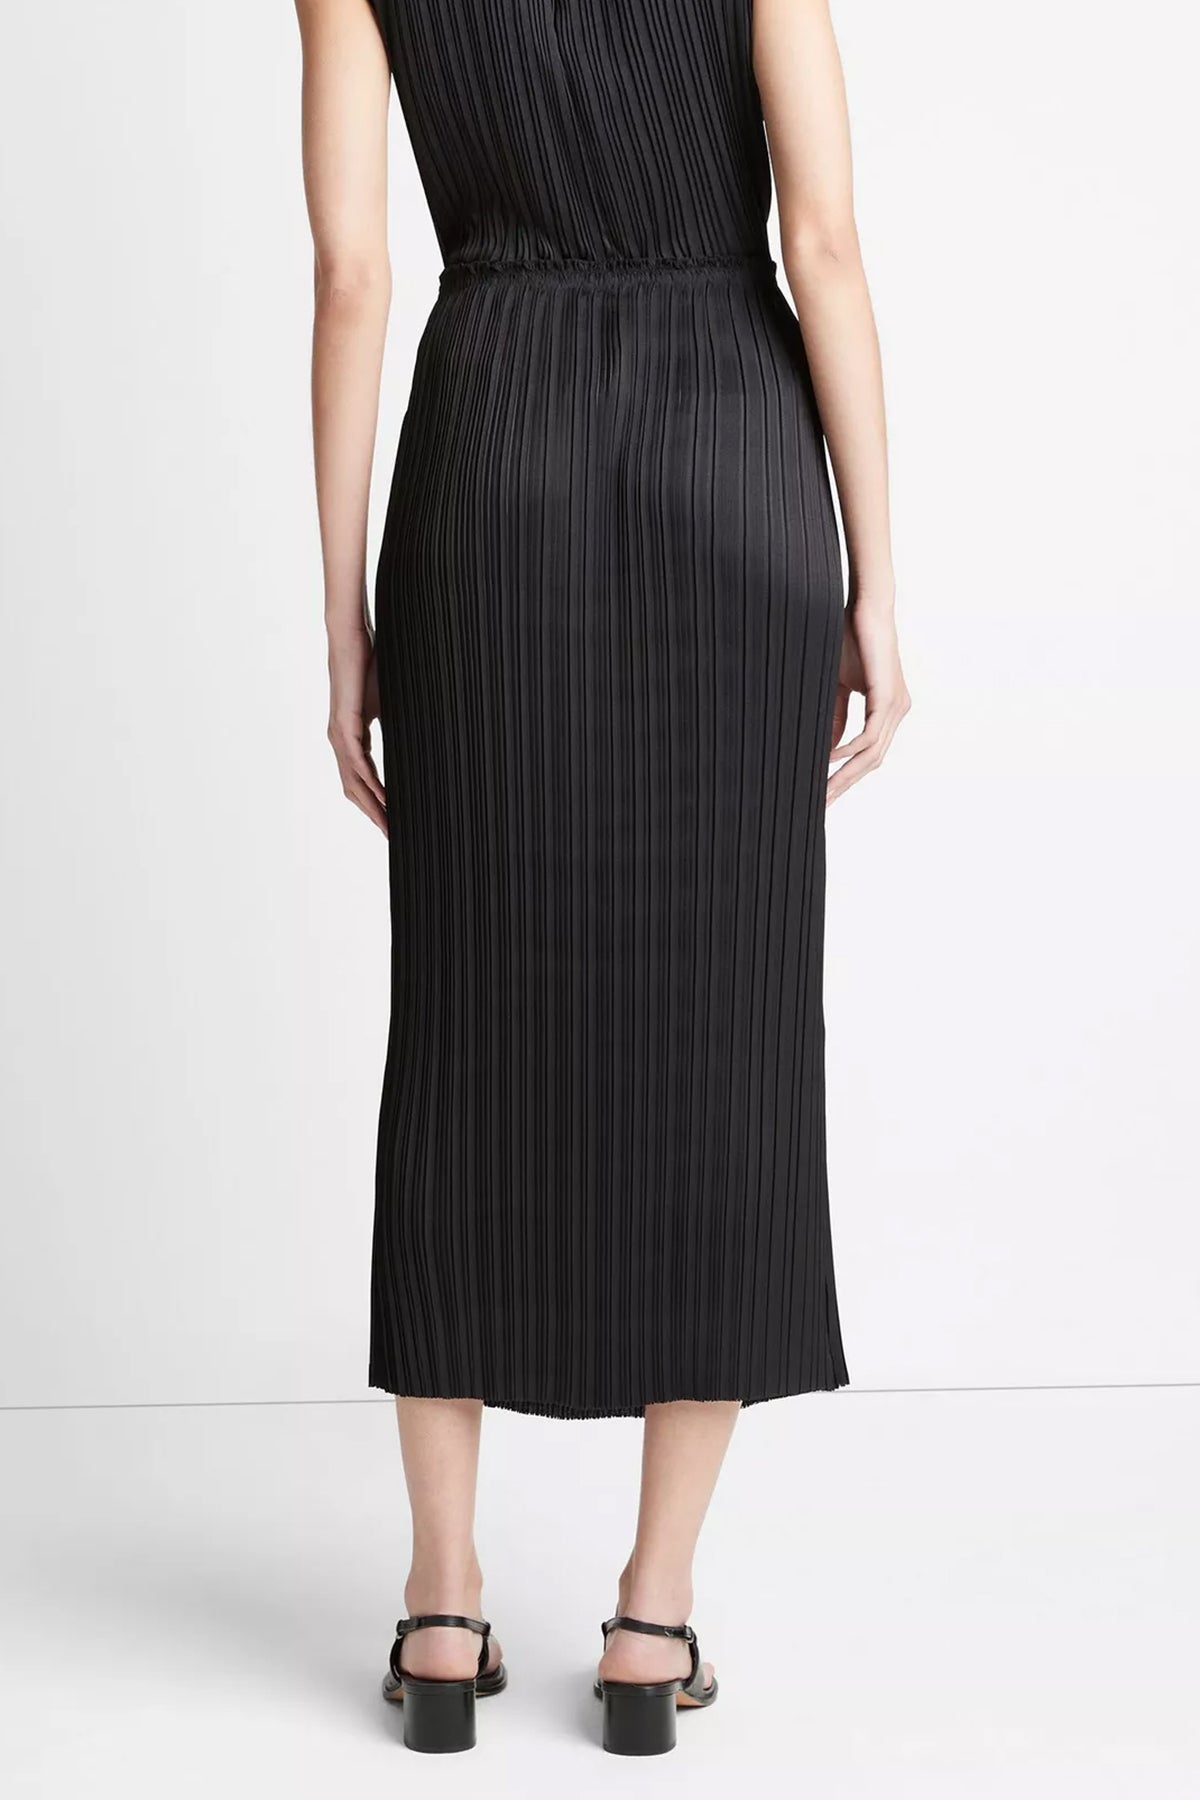 Pleated Satin Straight Pull-On Skirt in Black - shop-olivia.com